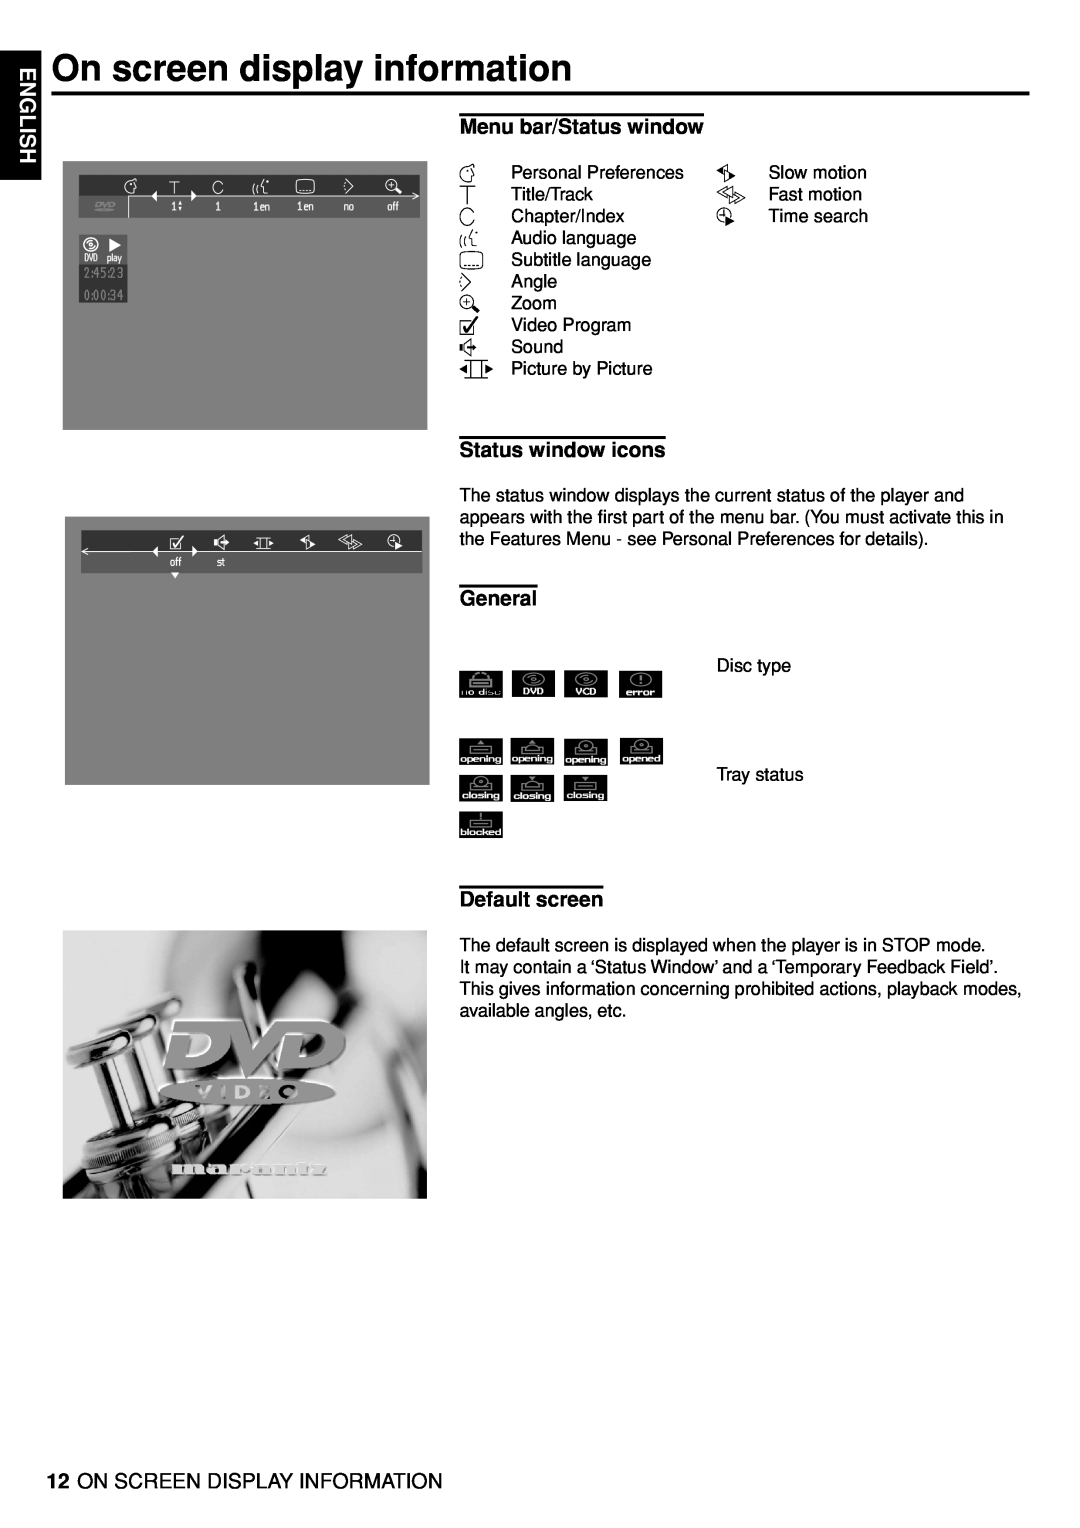 Marantz DV4100 manual On screen display information, Menu bar/Status window, Status window icons, General, Default screen 